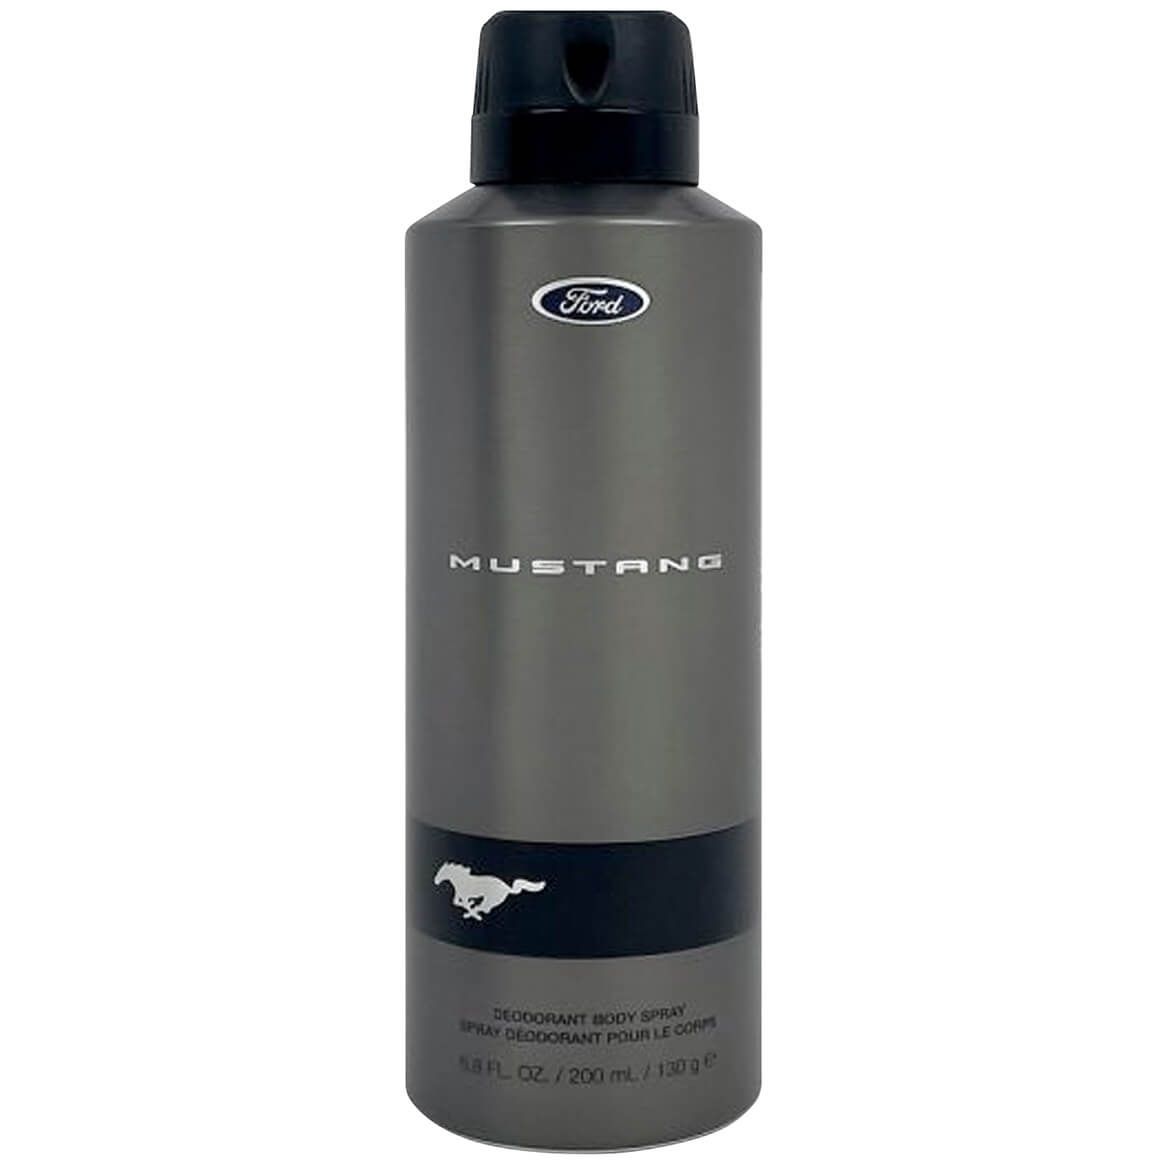 Mustang Black for Men Body Spray, 6.8 fl. oz. + '-' + 377298